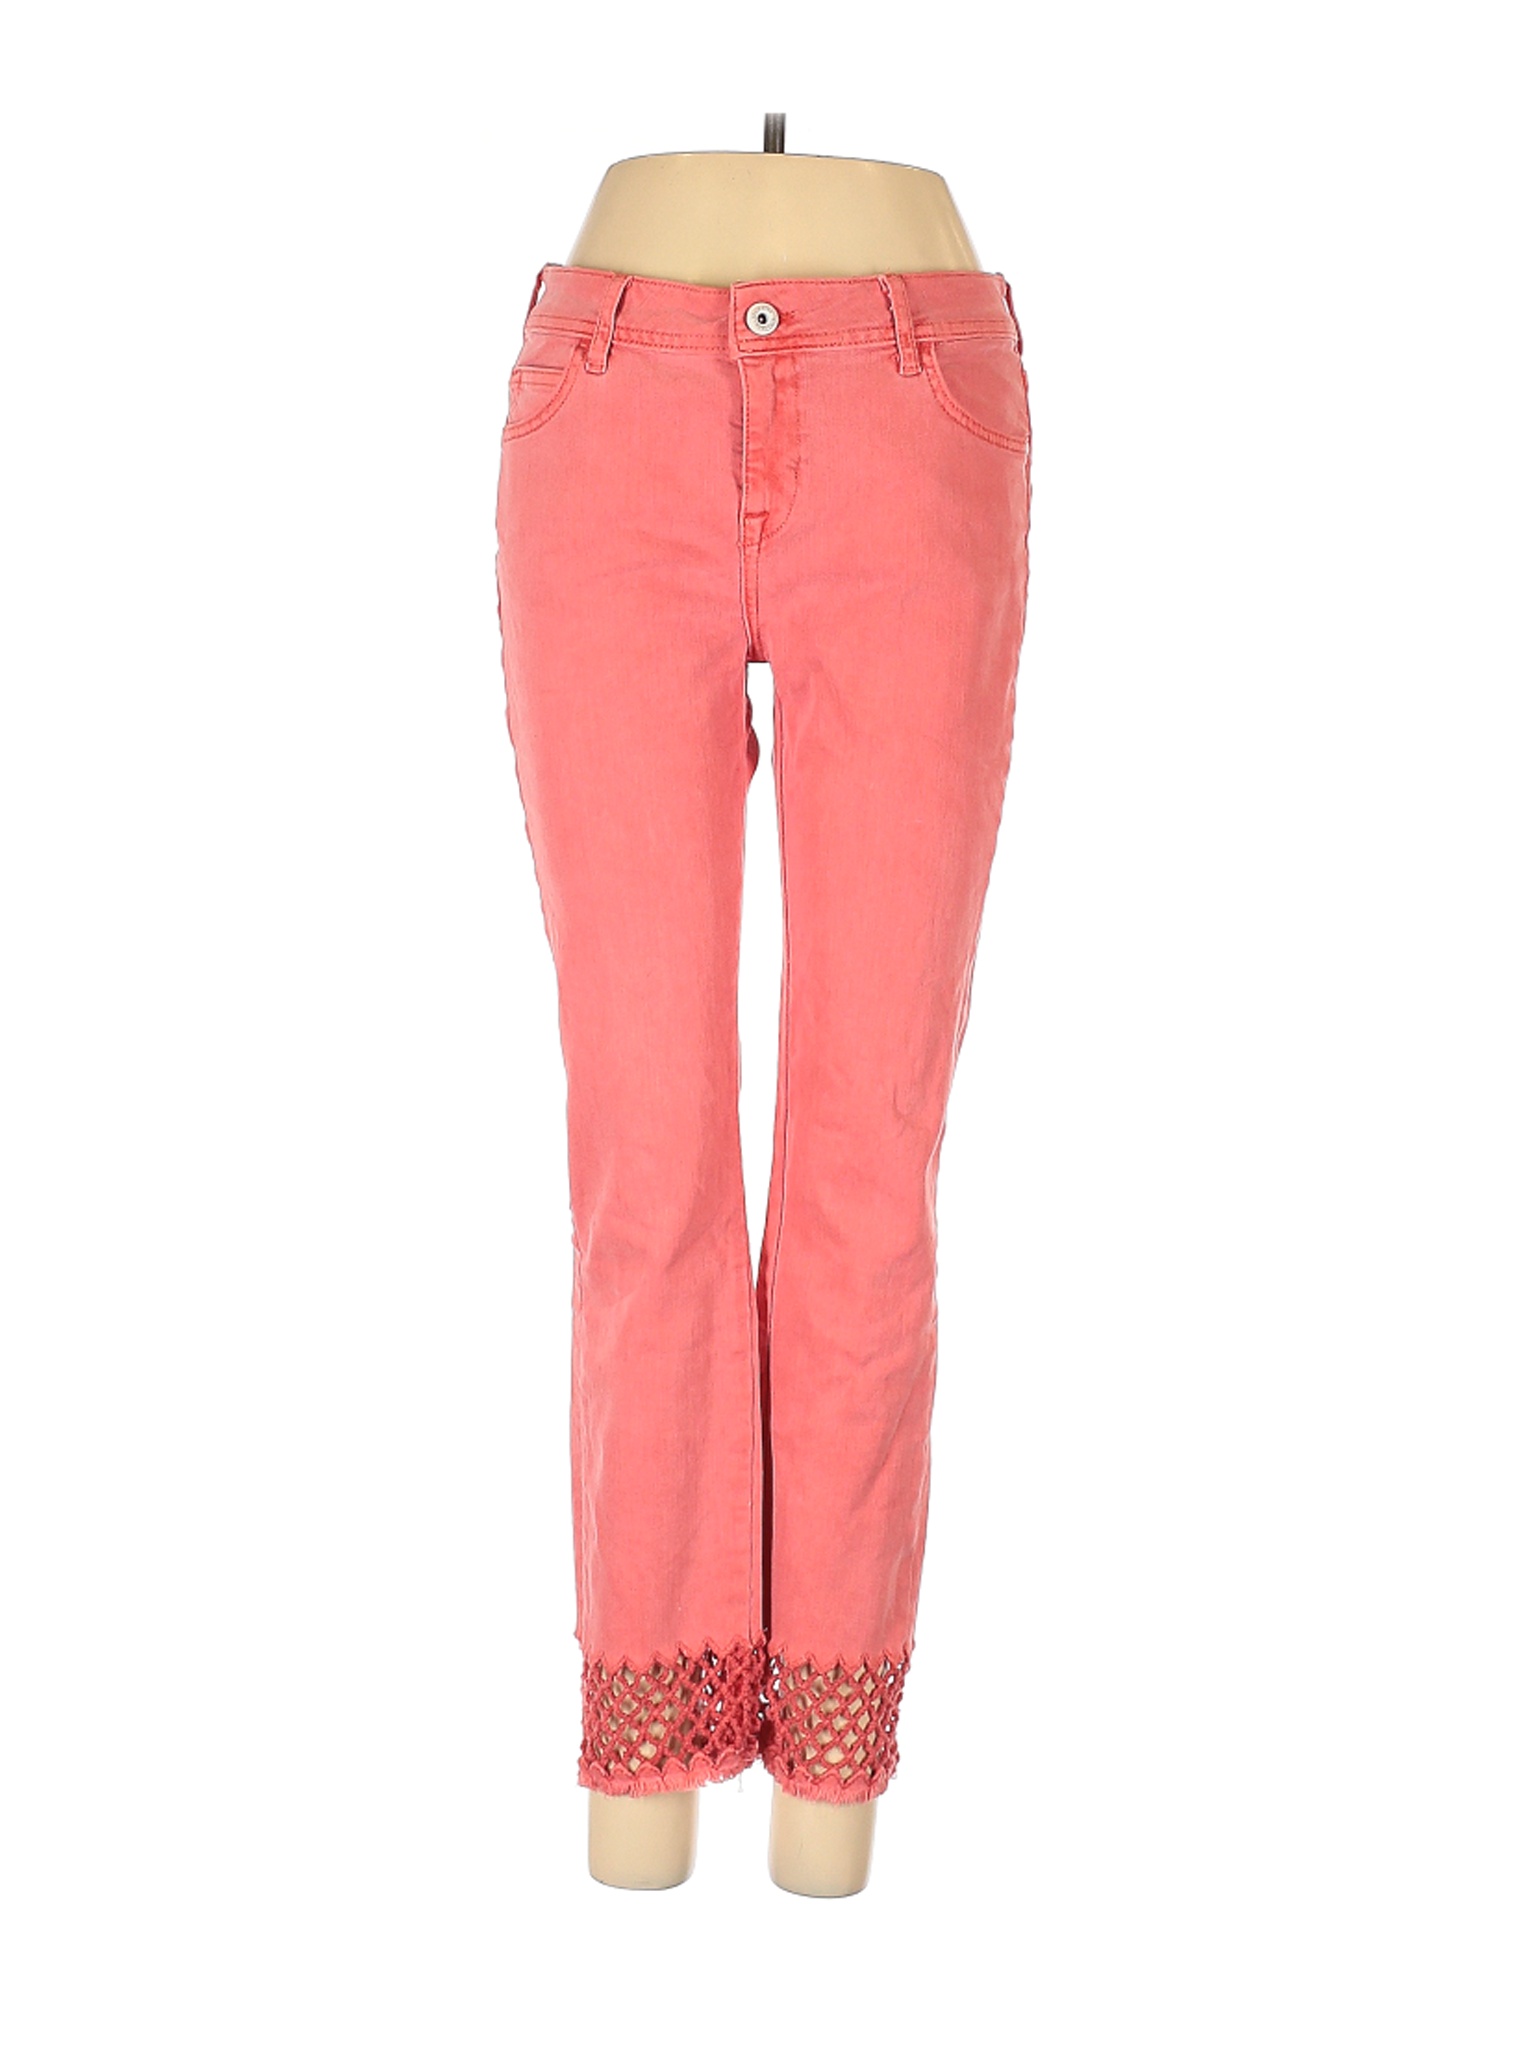 Zara Basic Women Pink Jeans 4 | eBay